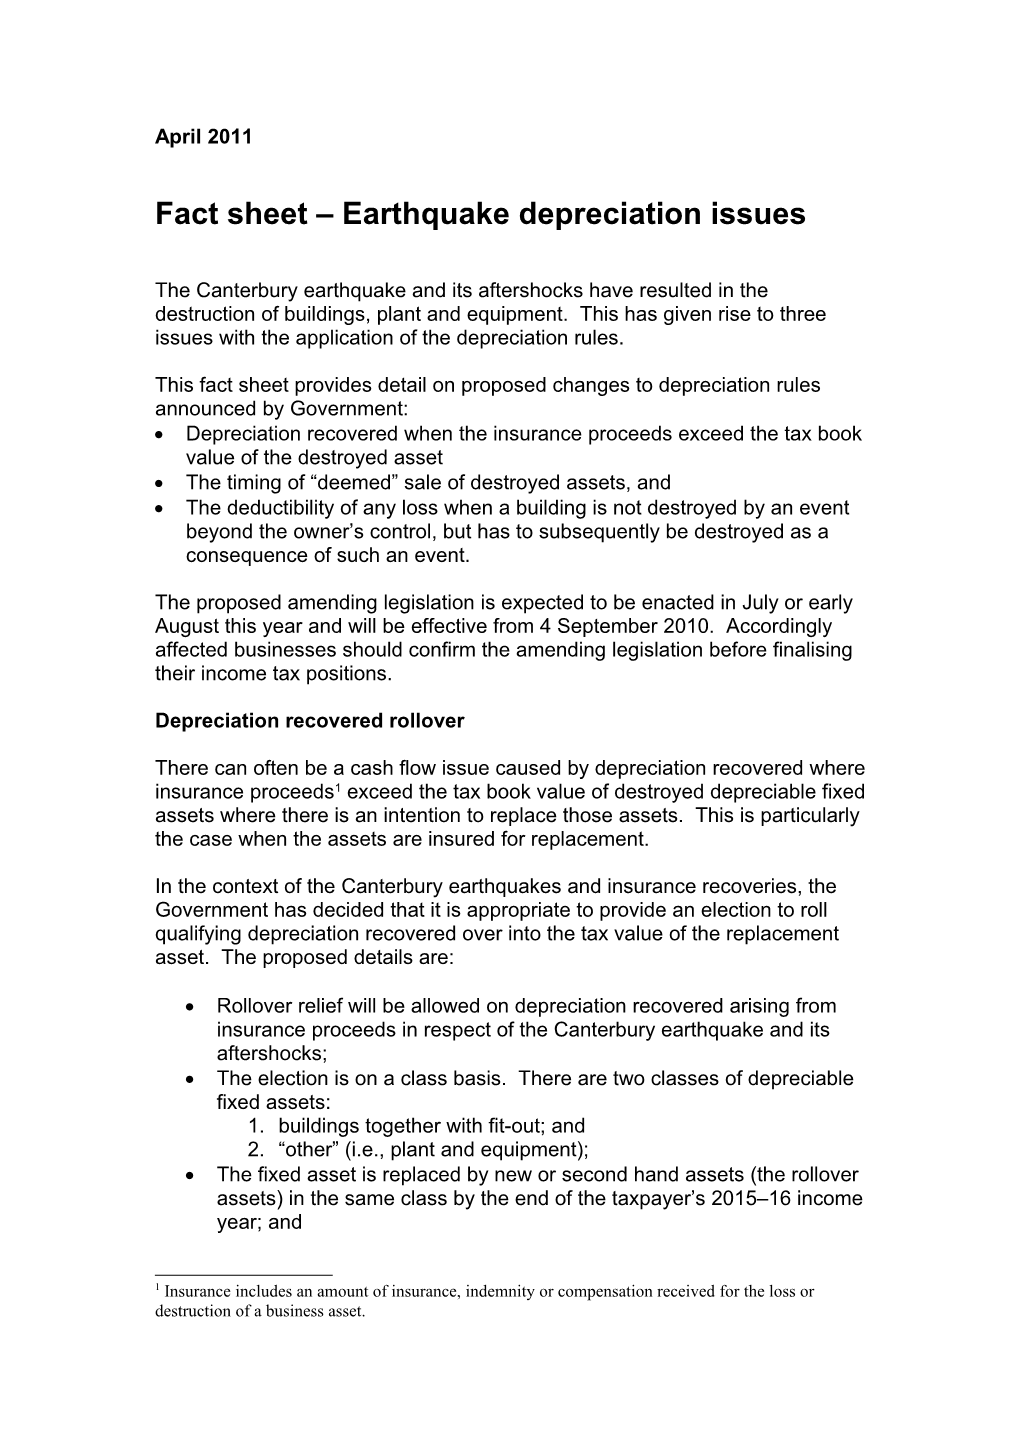 Fact Sheet - Earthquake Depreciation Issues - April 2011